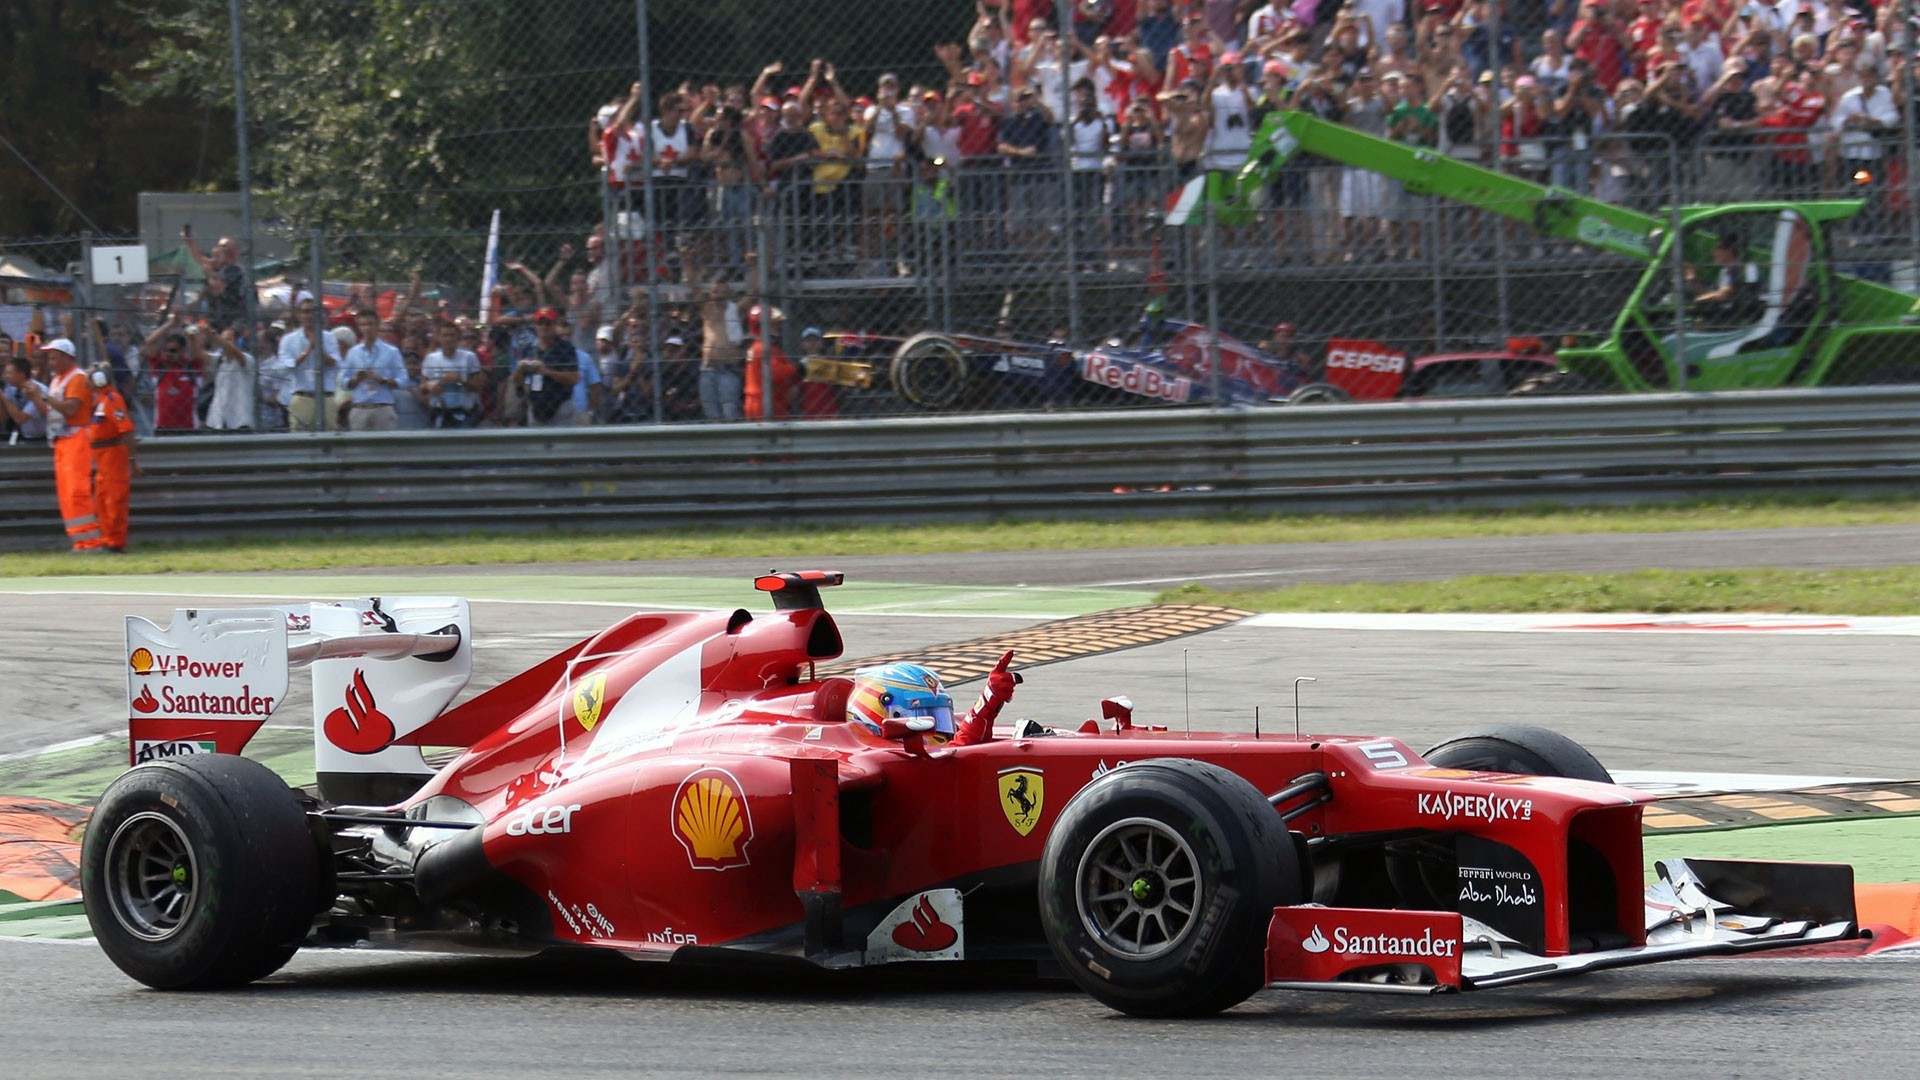 General 1920x1080 racing race cars vehicle sport red cars motorsport race tracks Fernando Alonso Formula 1 Scuderia Ferrari italian cars Racing driver